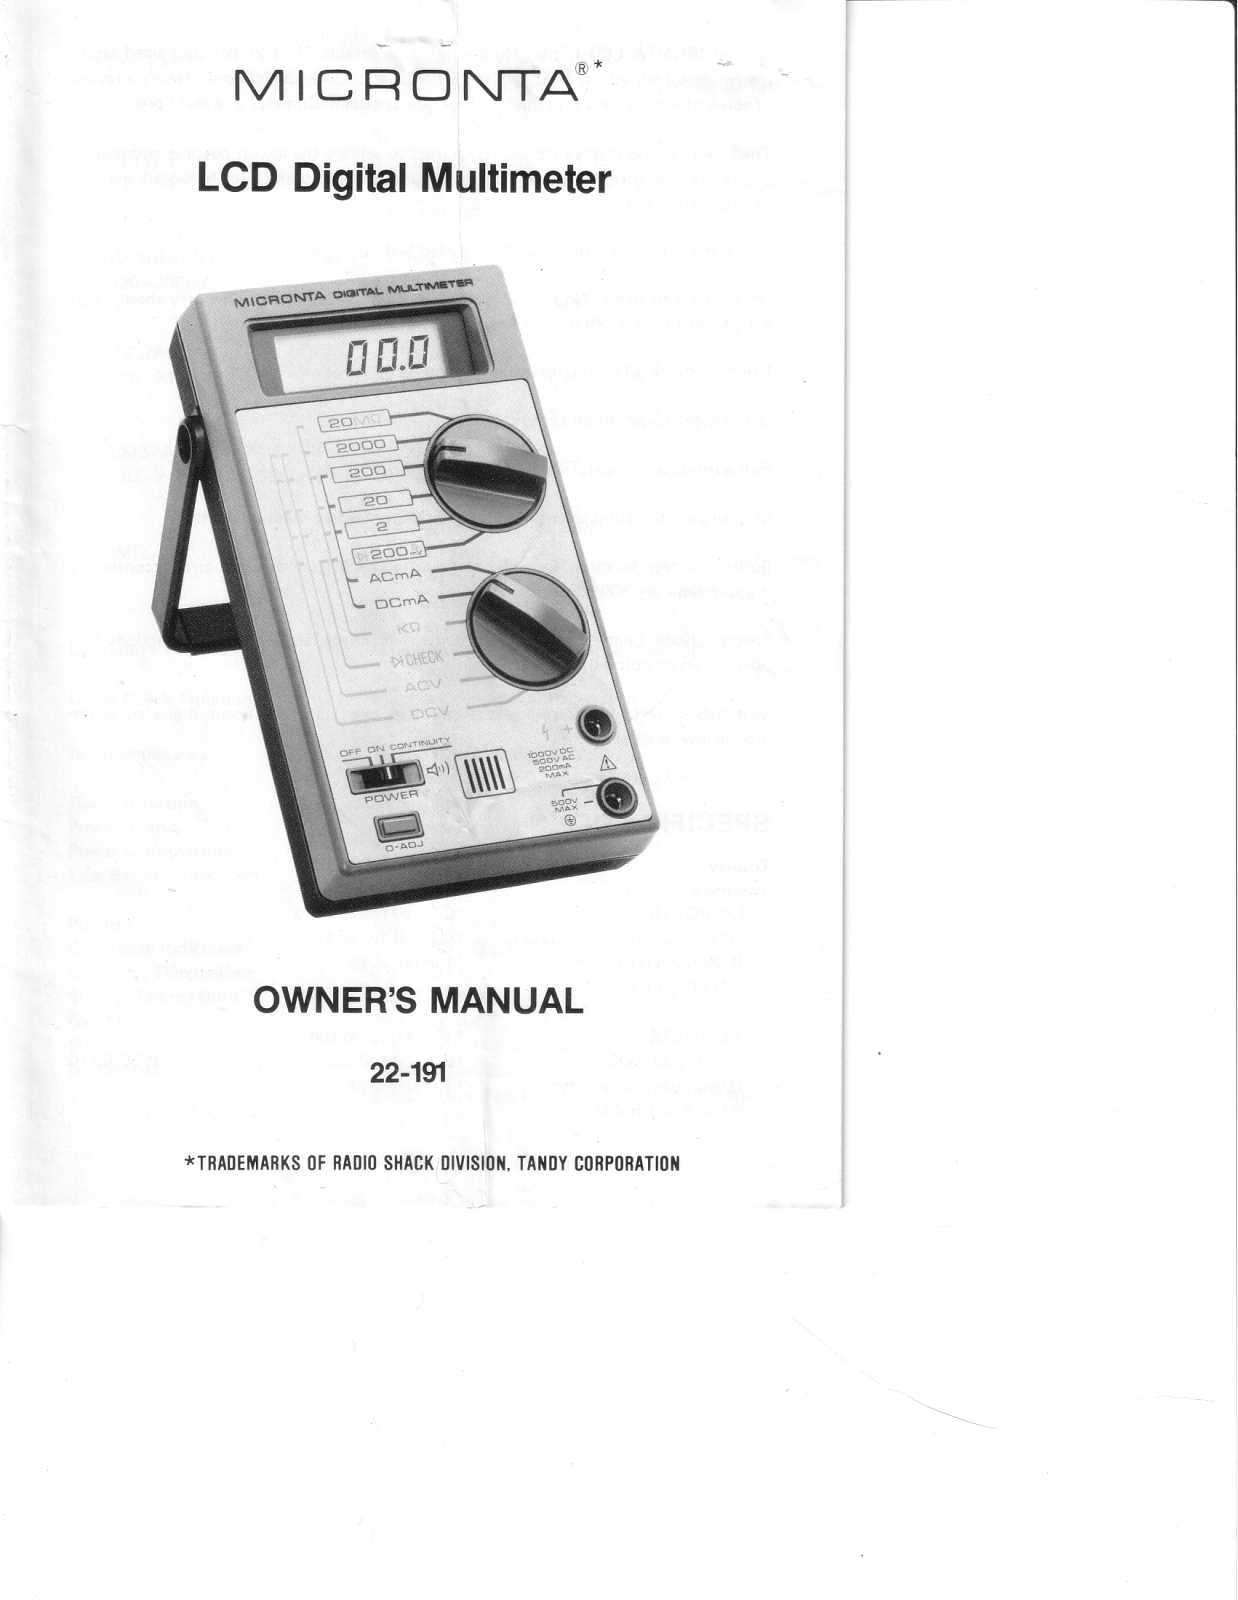 Radioshack MICRONTA 22-191 MULTIMETER Manual